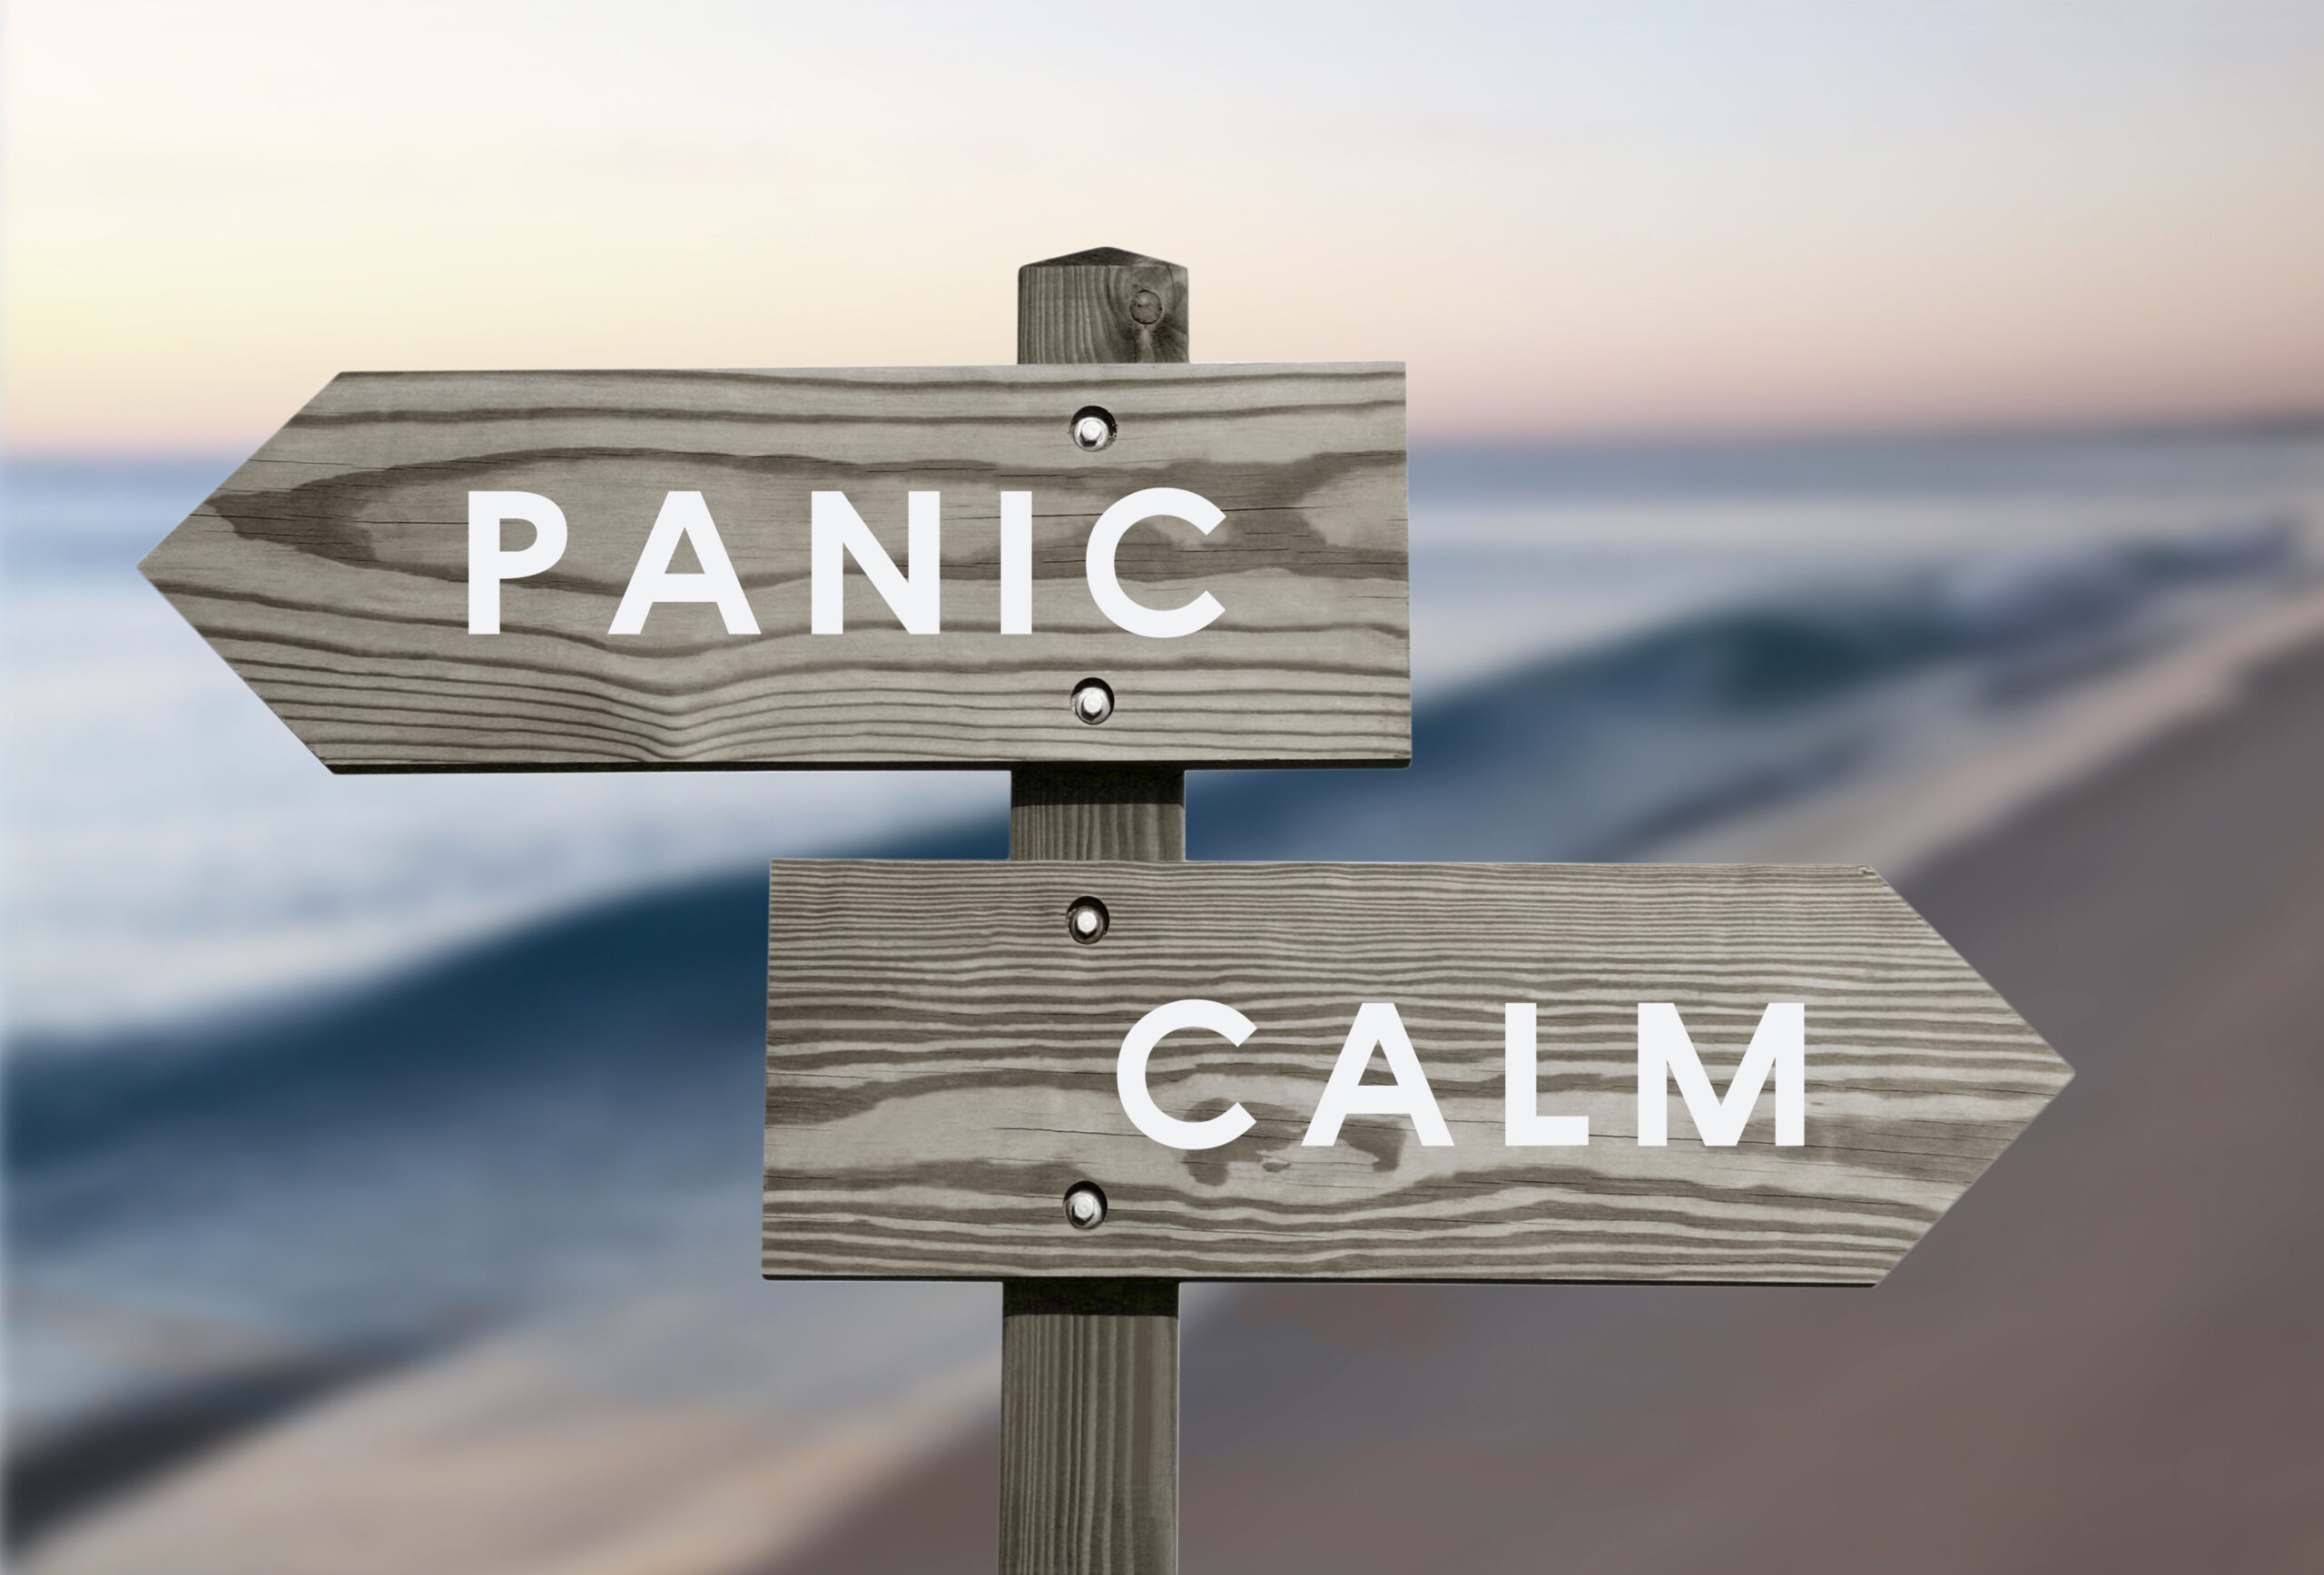 Calm vs Panic